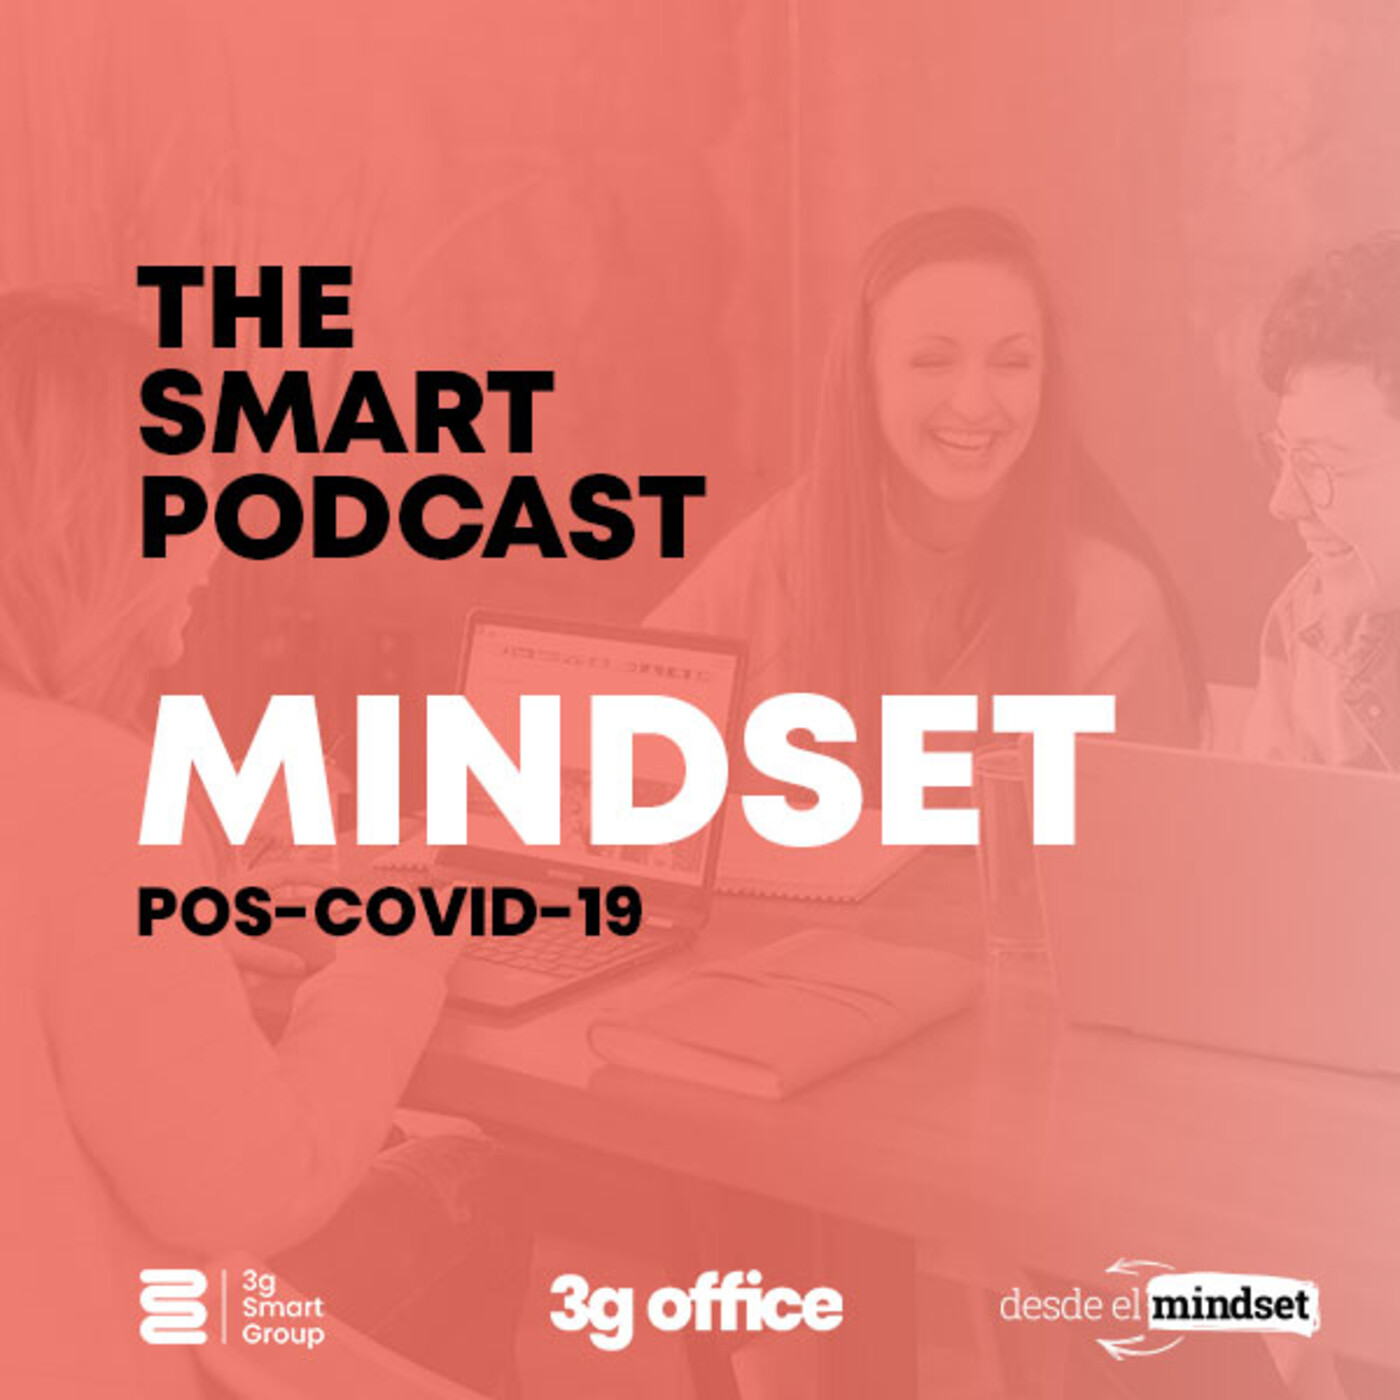 The Smart Podcast - Mindset